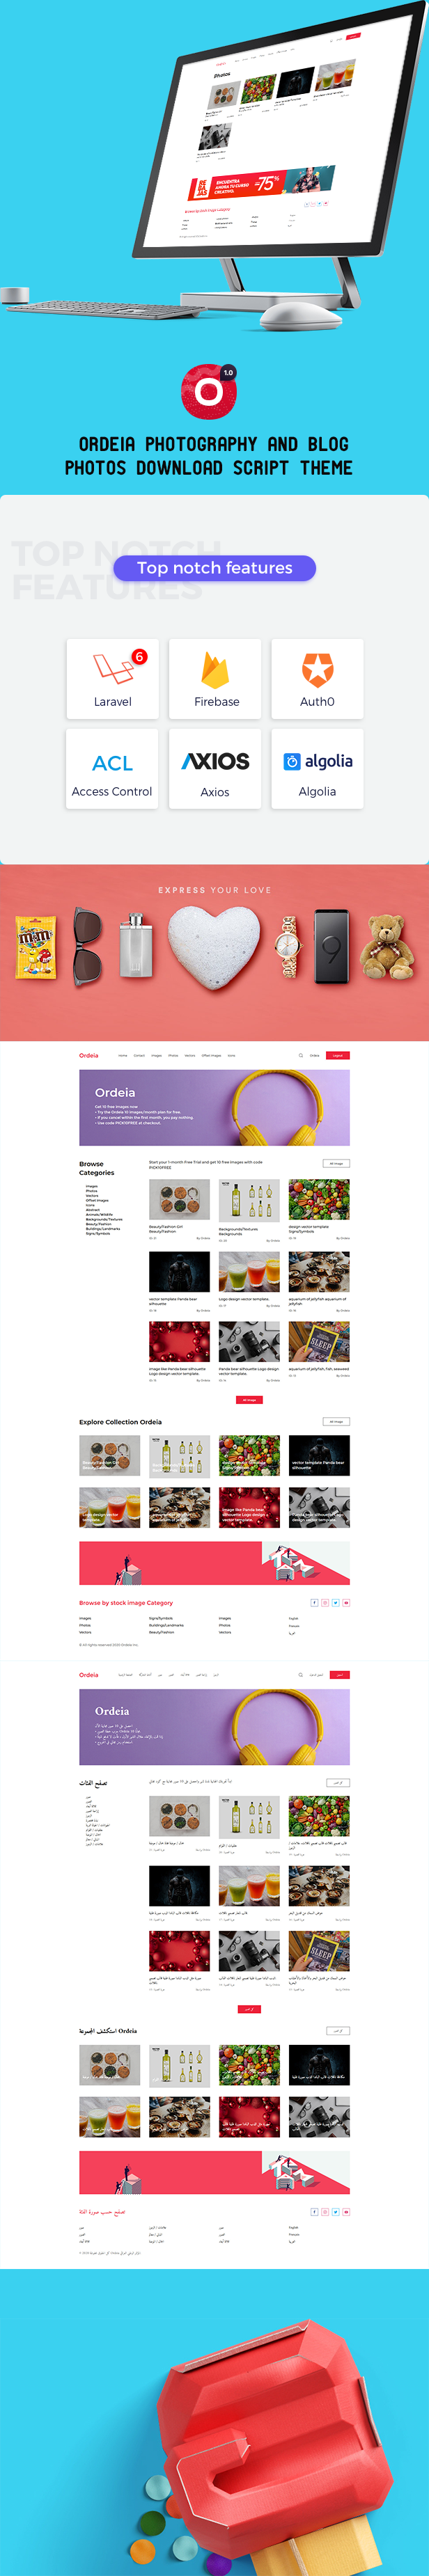 Ordeia – Photography and Blog / Photos Download script Theme - 1